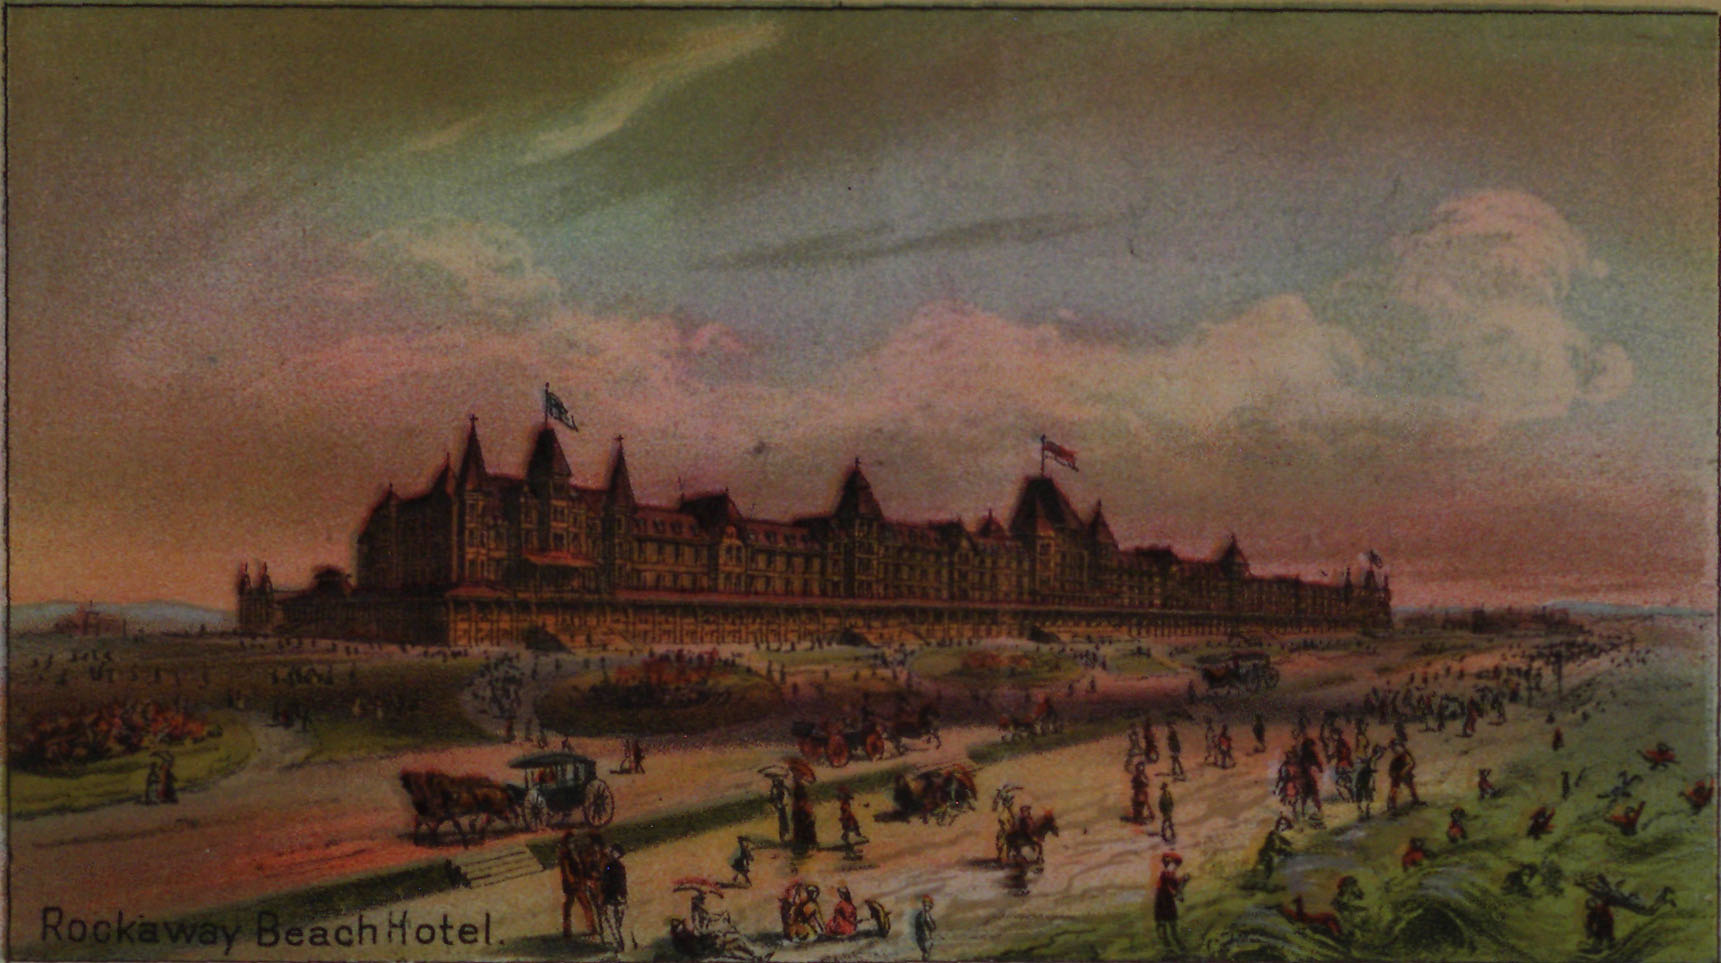 Rockaway Beach Hotel (1883)